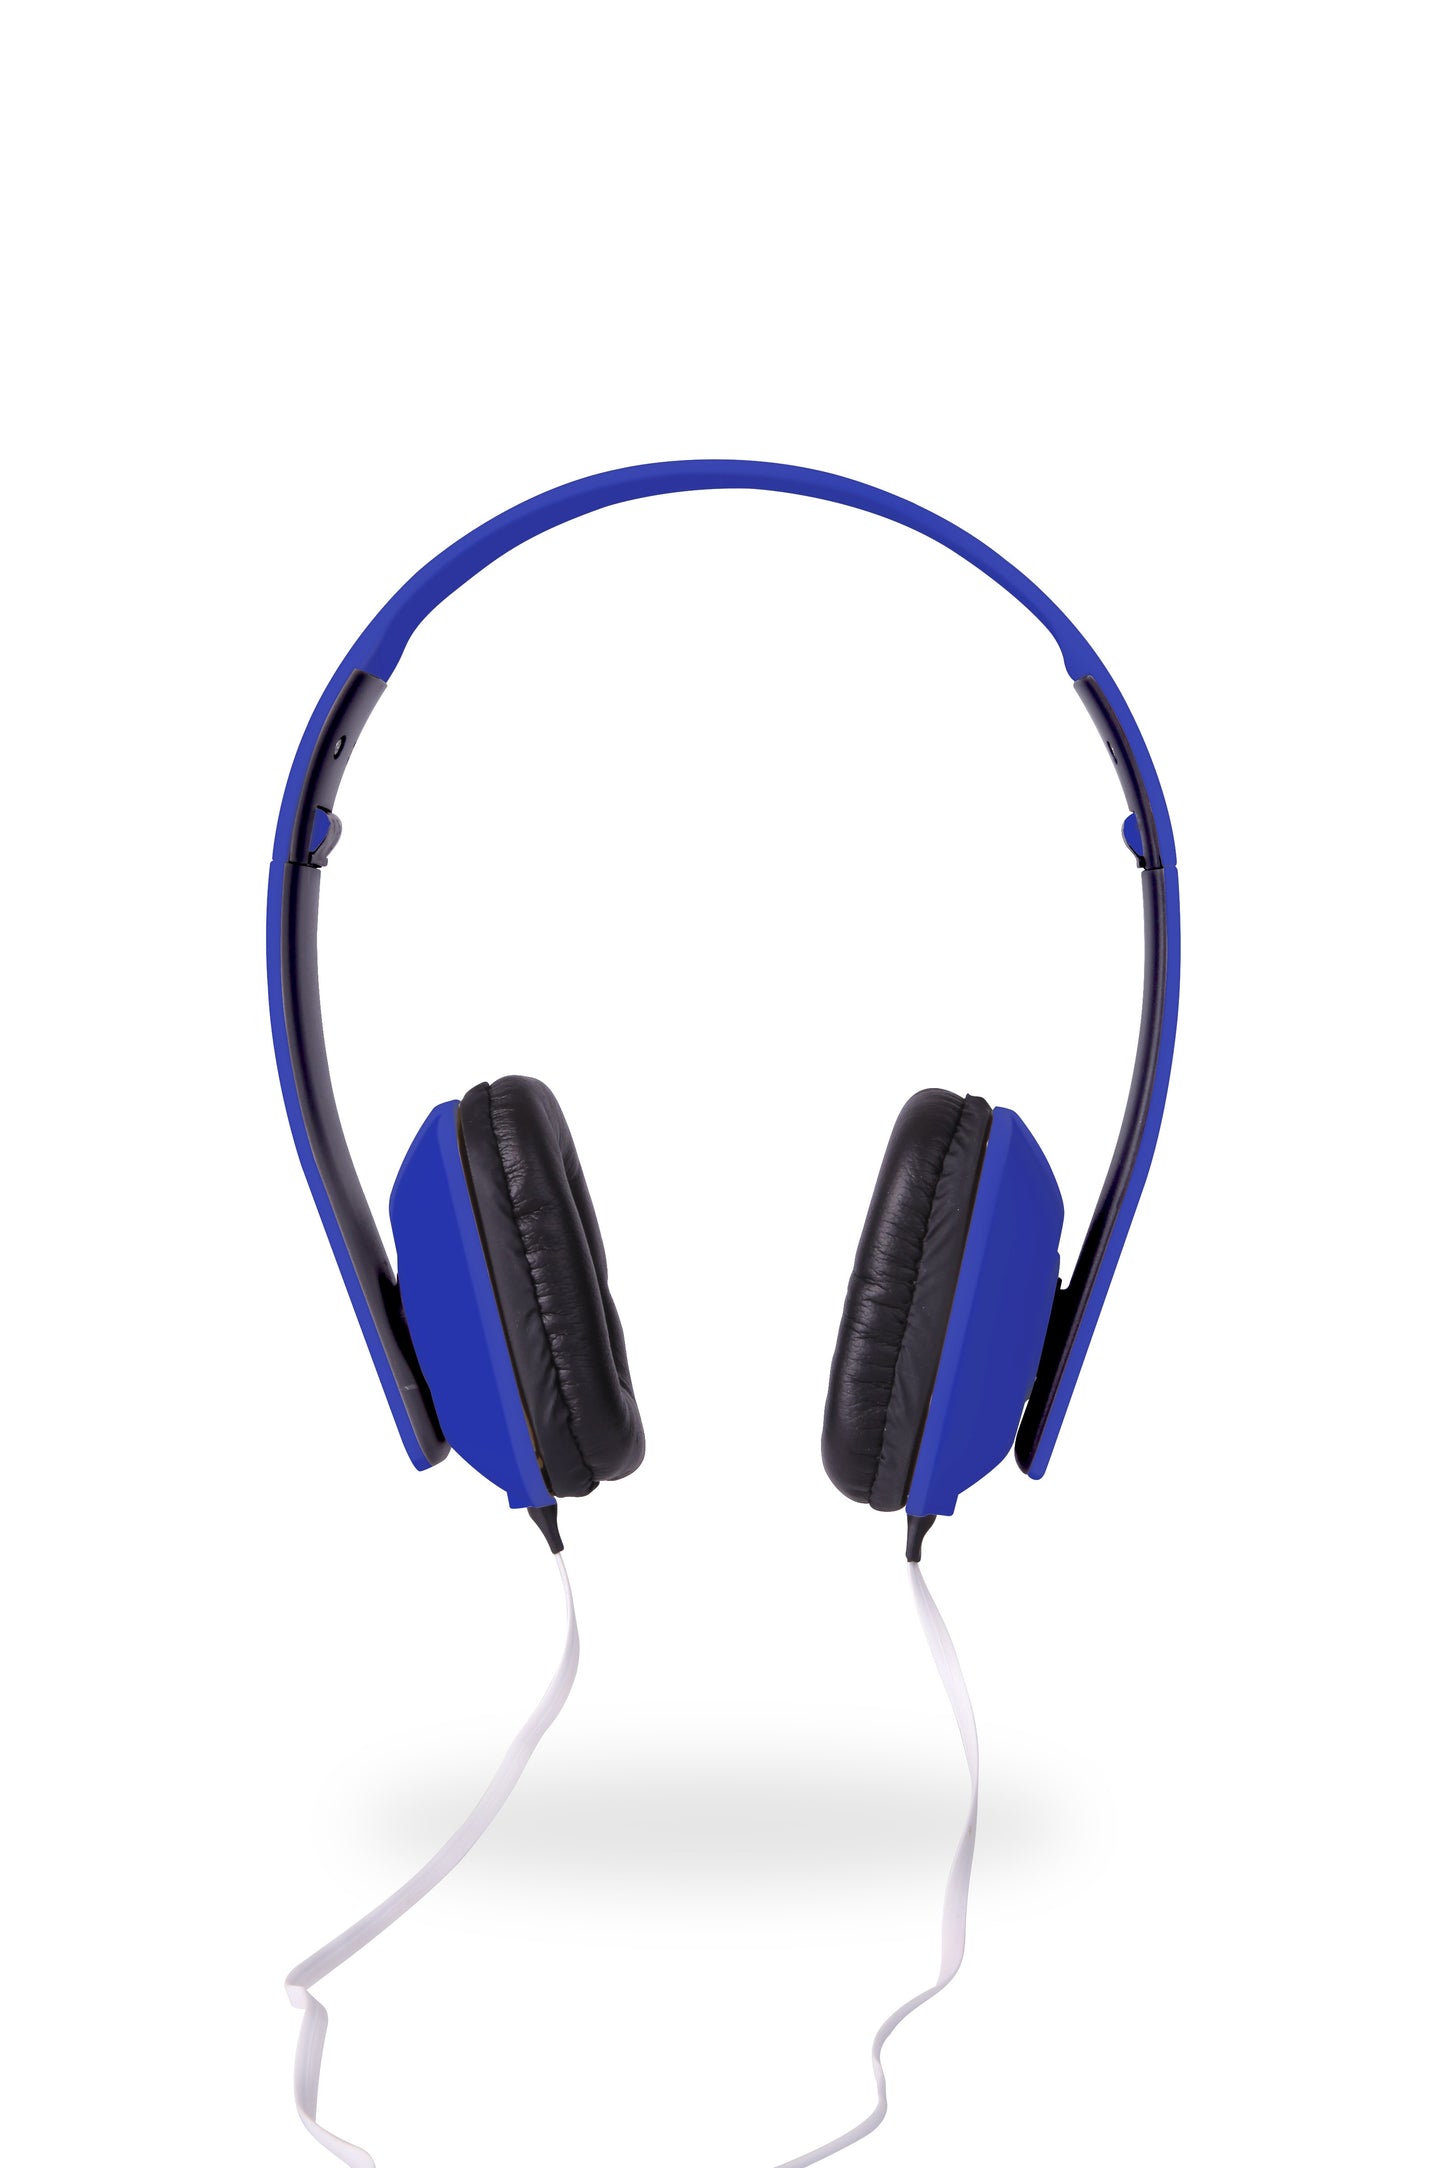 Yomax Headphones - Blue Only